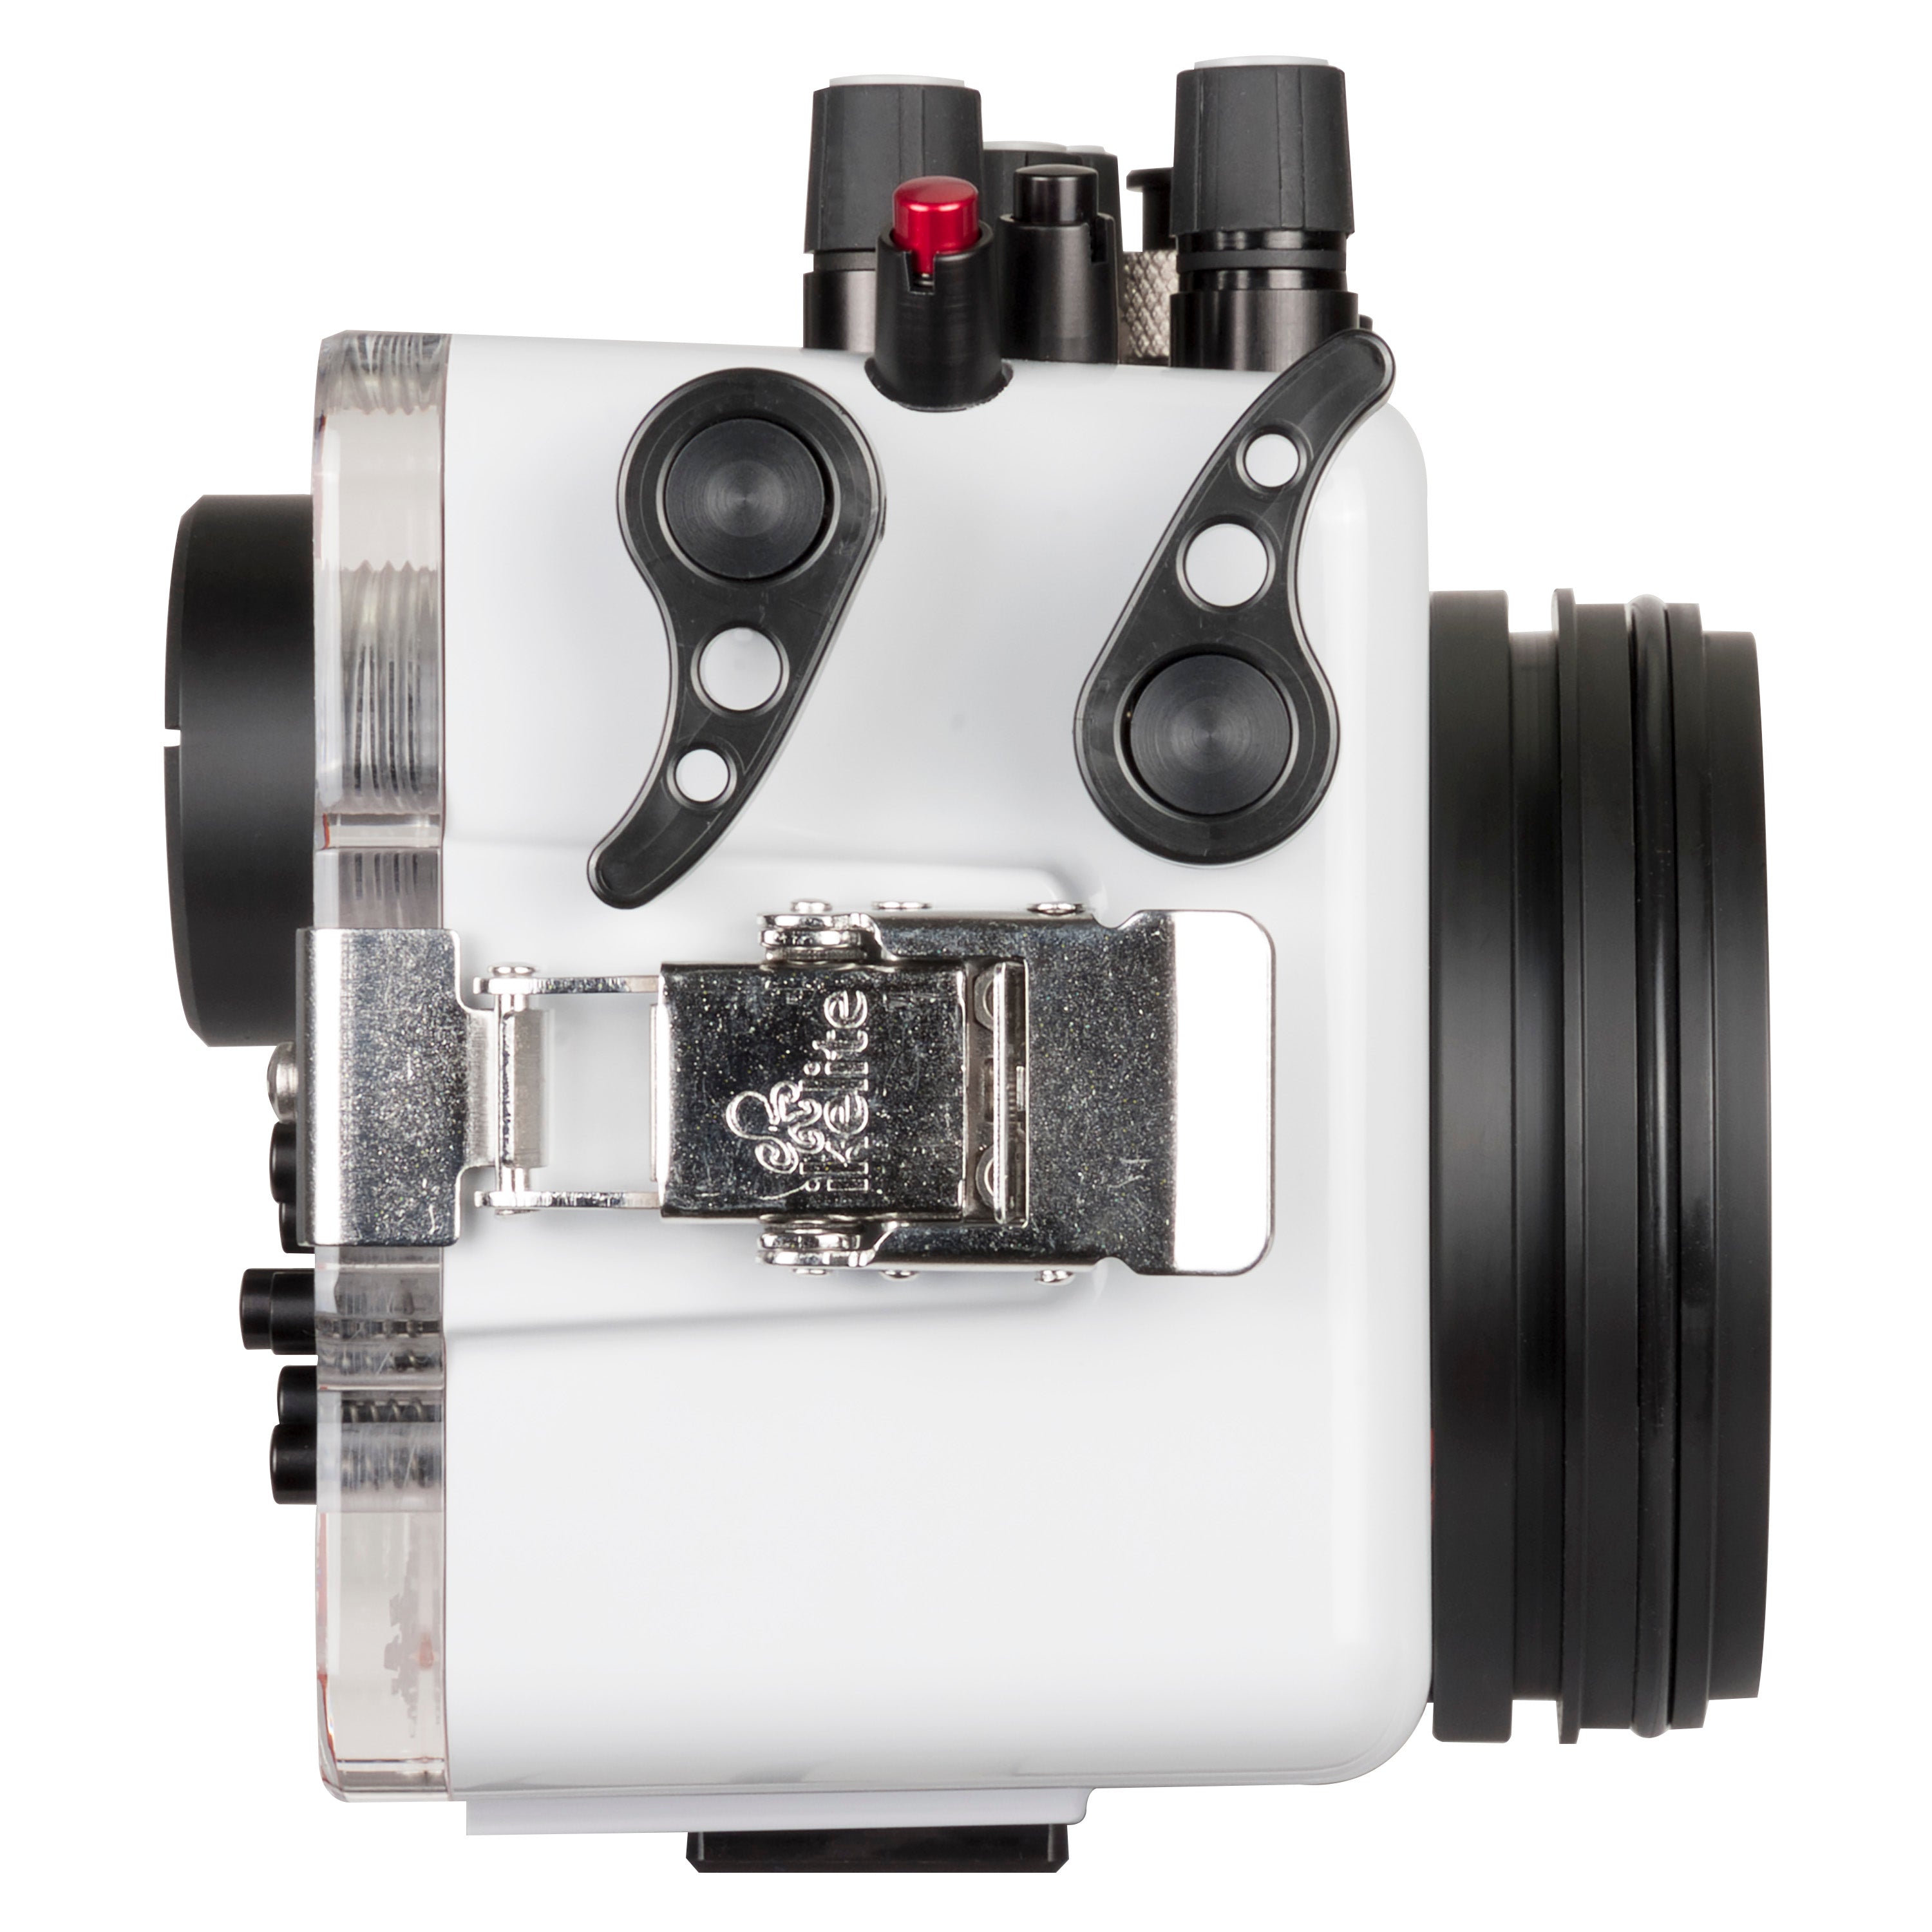 200DLM/A Underwater TTL Housing for Olympus OM-D E-M10 Mark III Mirrorless Micro Four-Thirds Cameras